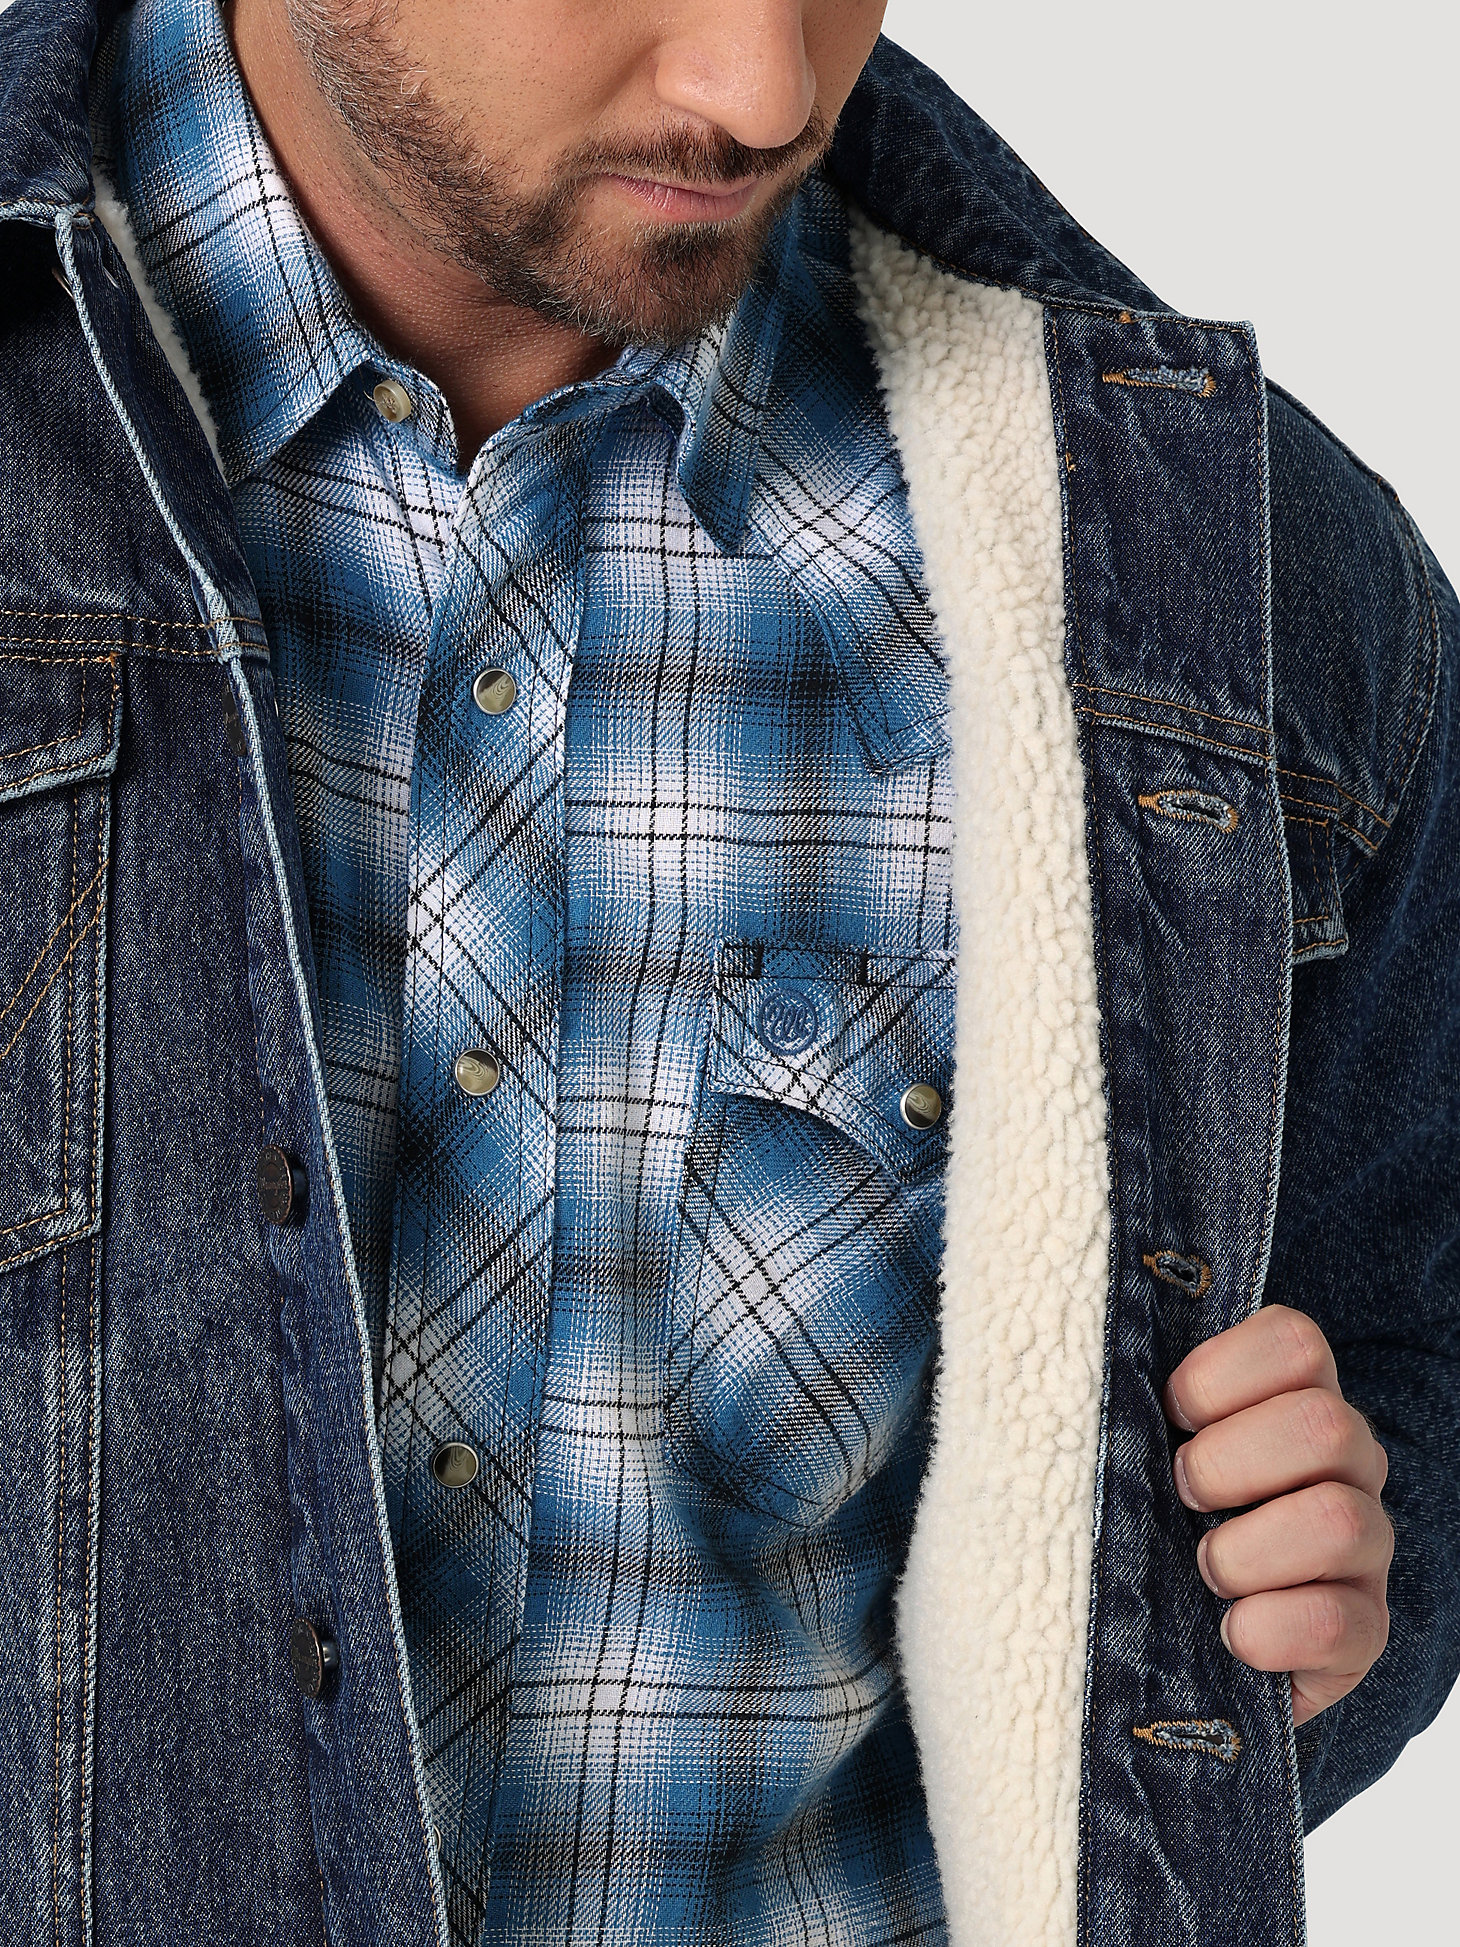 Men's Wrangler Retro® Sherpa Lined Western Denim Jacket in Blue Indigo alternative view 6